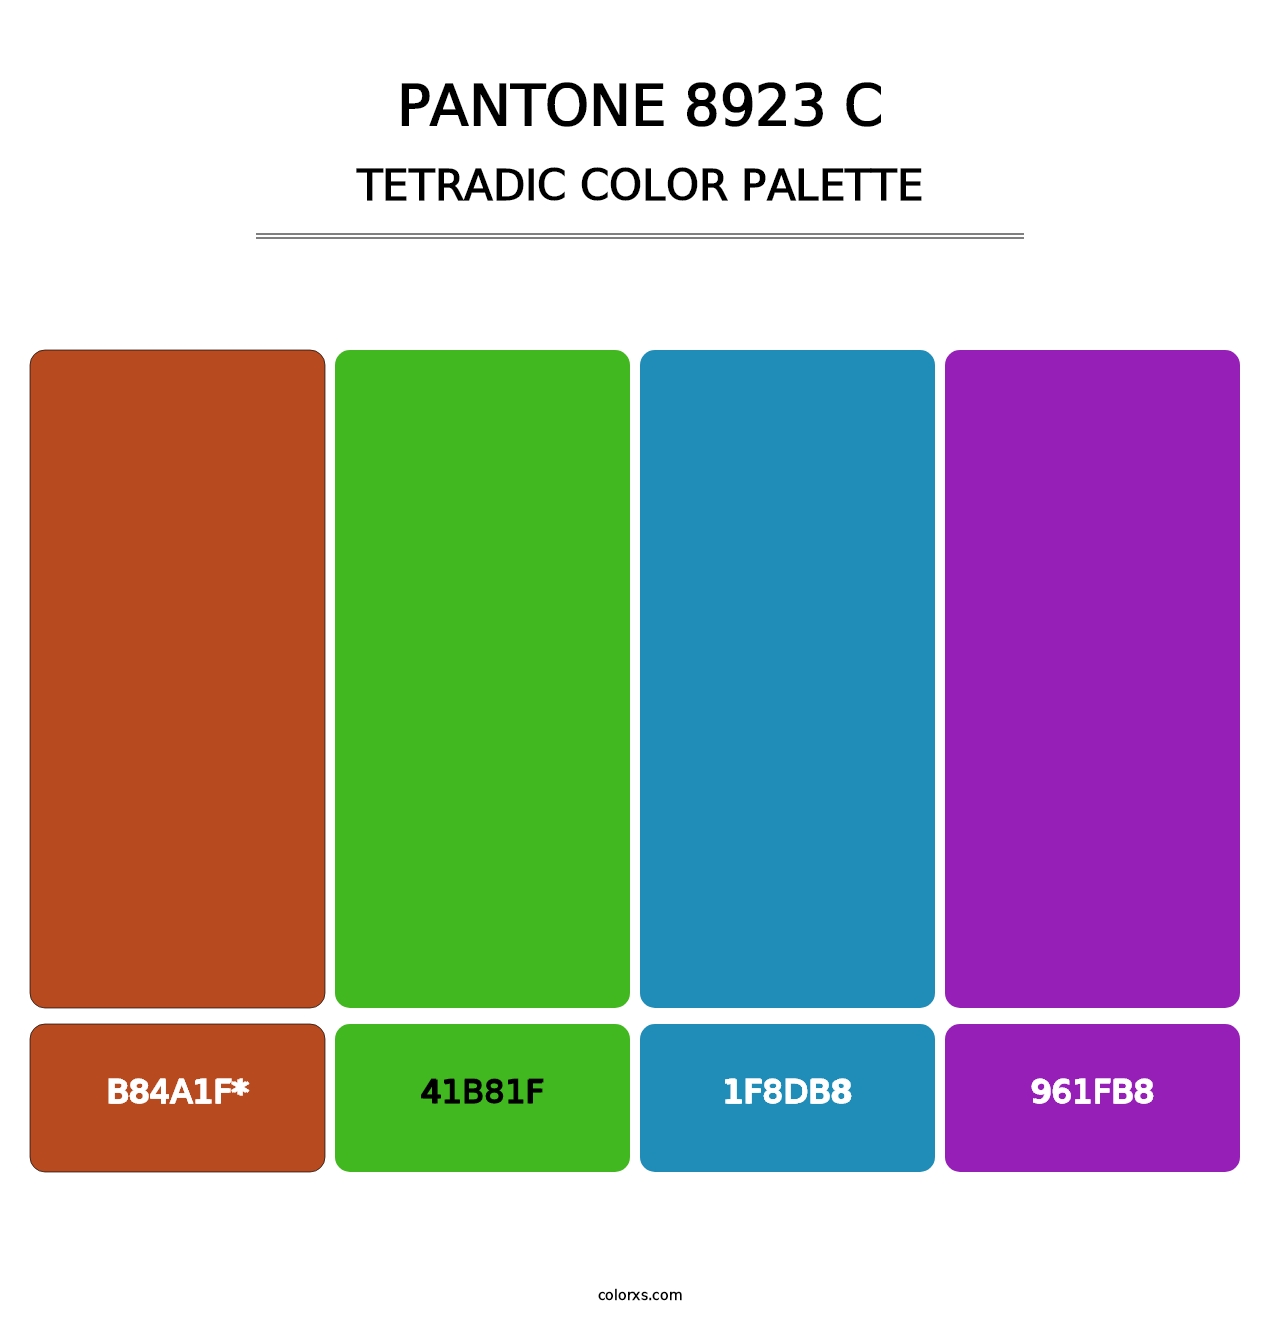 PANTONE 8923 C - Tetradic Color Palette